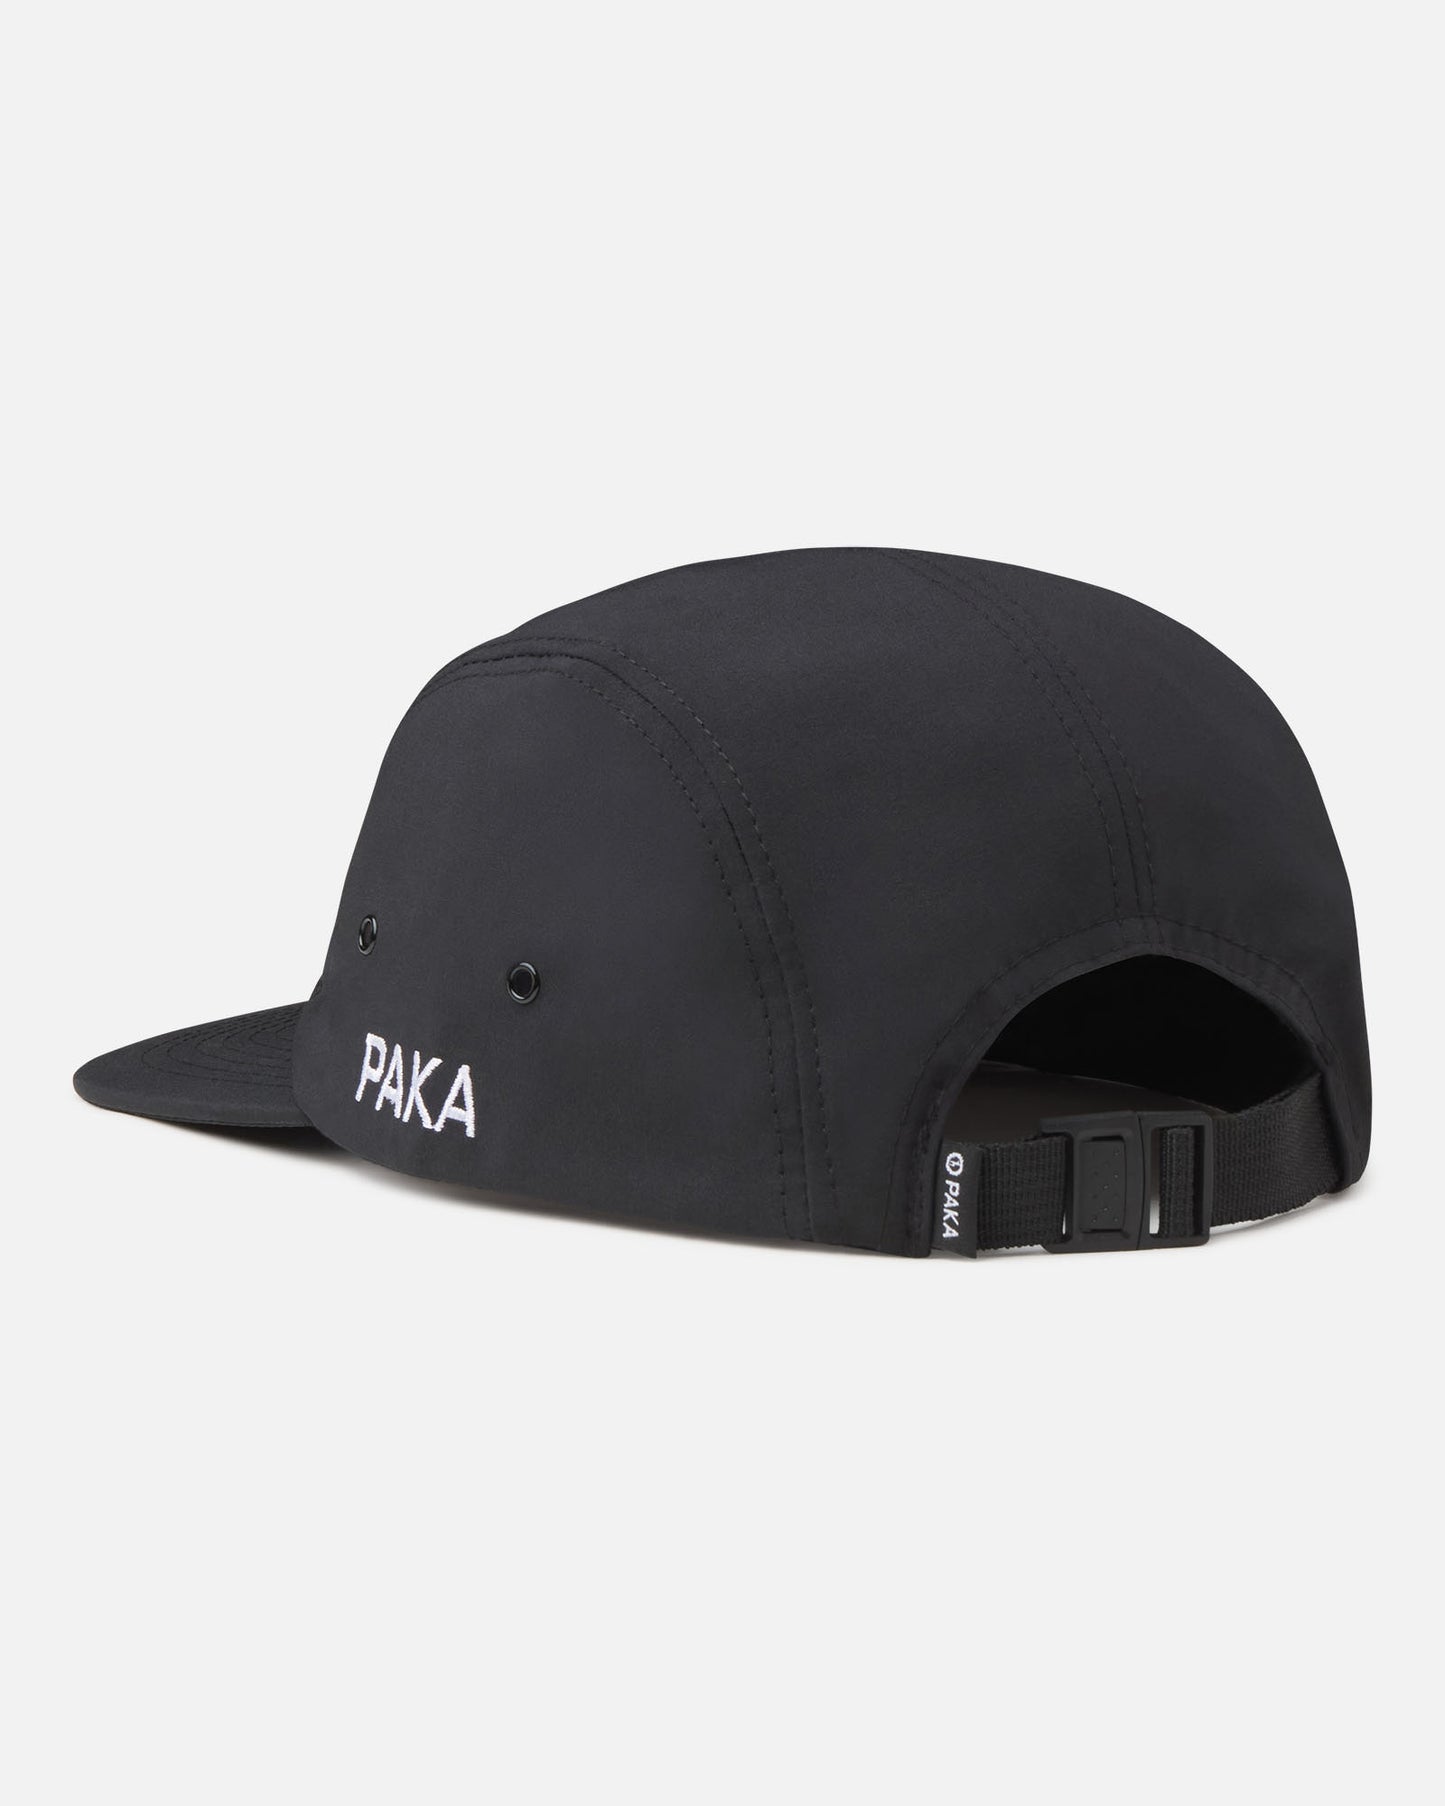 black 5 panel alpaca hat with paka text on side